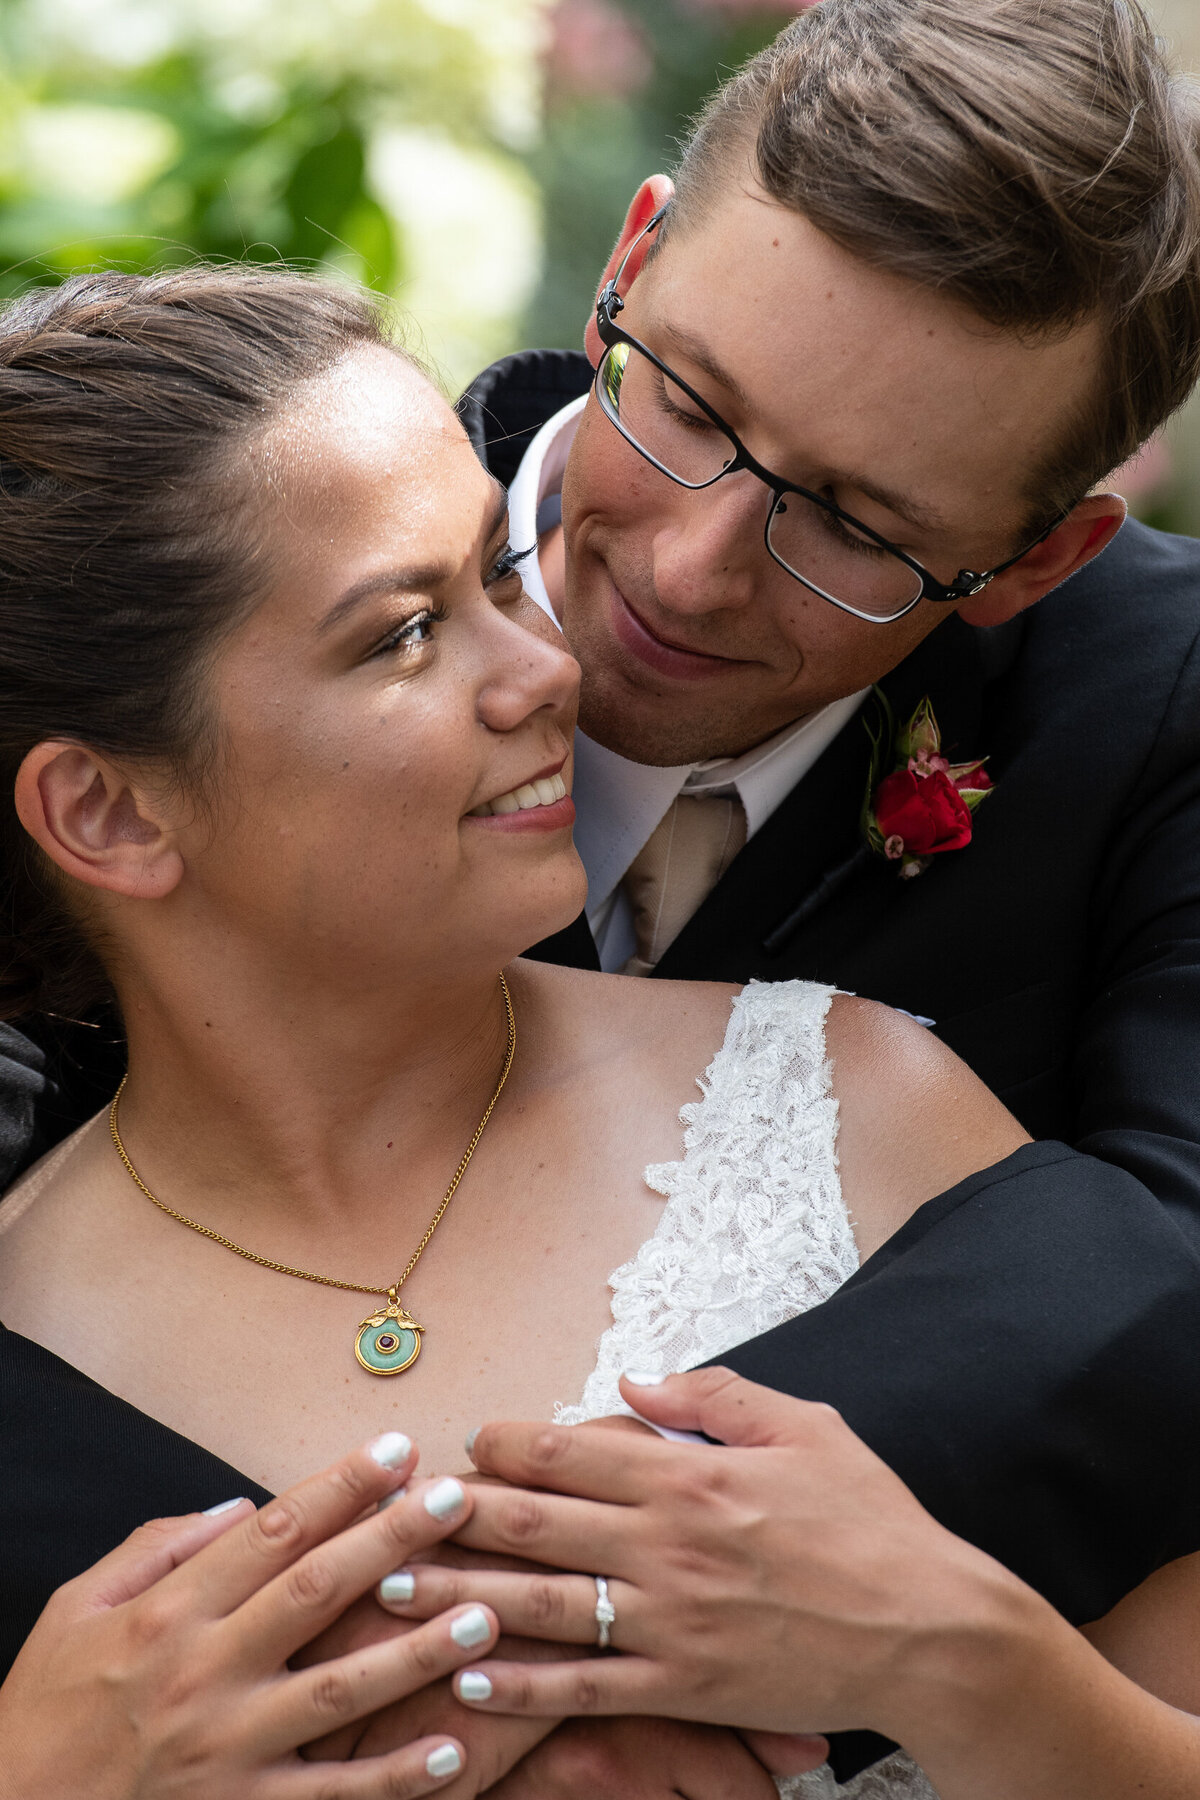 Minnesota Wedding Photography - LGBTQ Friendly - Dog Friendly - RKH Images (3 of 16)